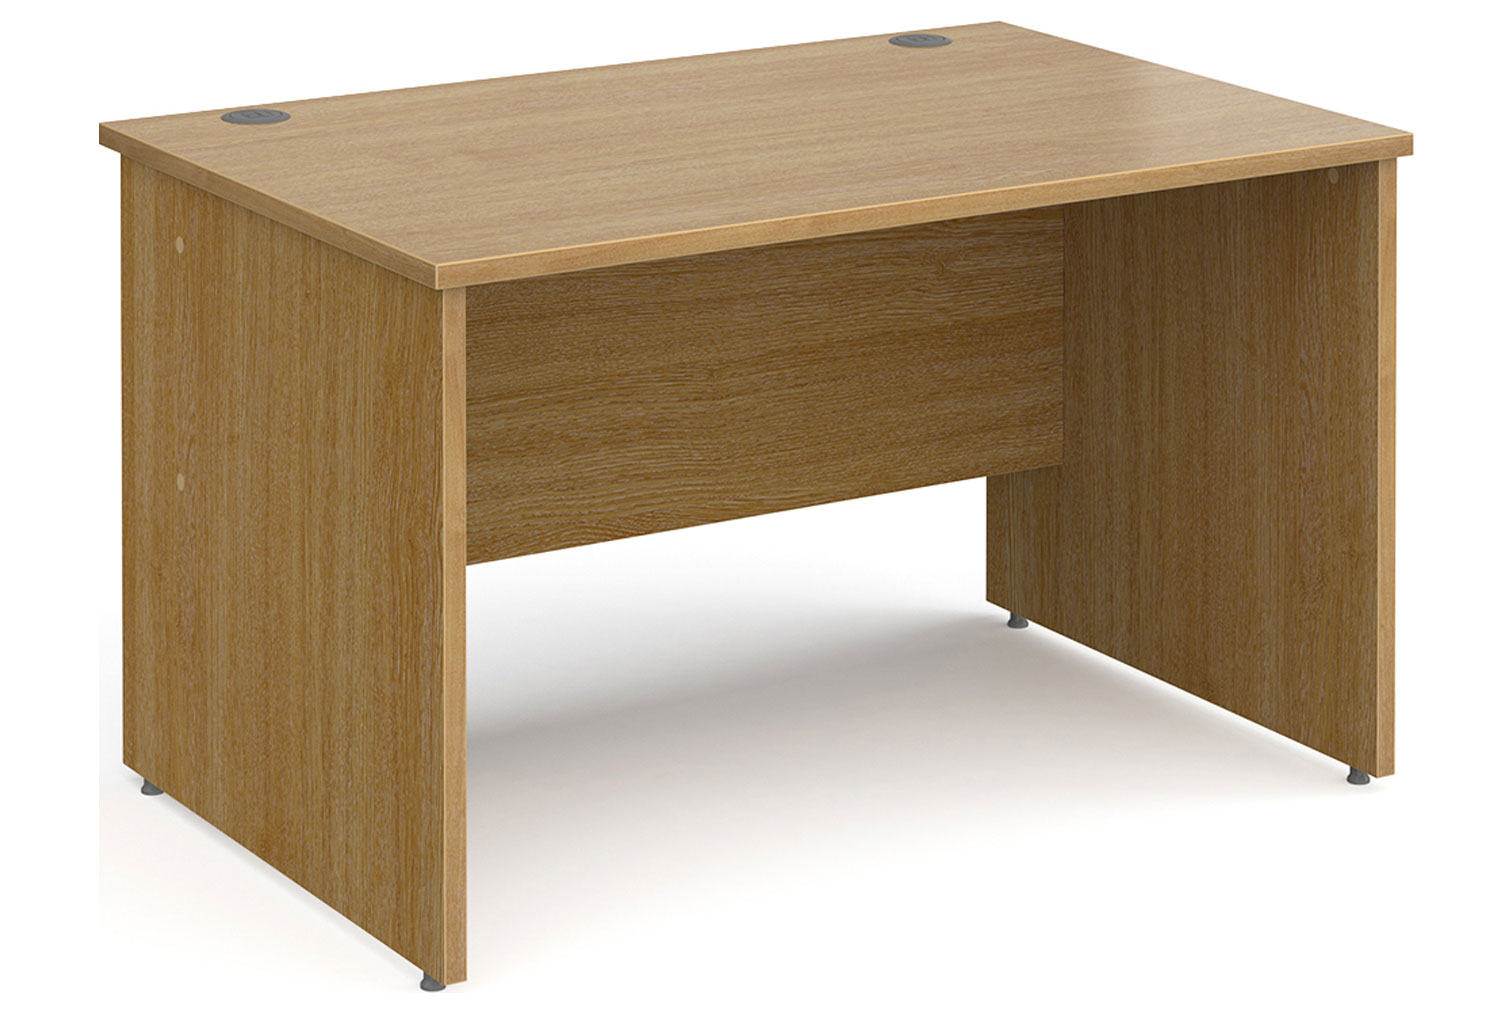 All Oak Panel End Rectangular Office Desk, 120wx80dx73h (cm)